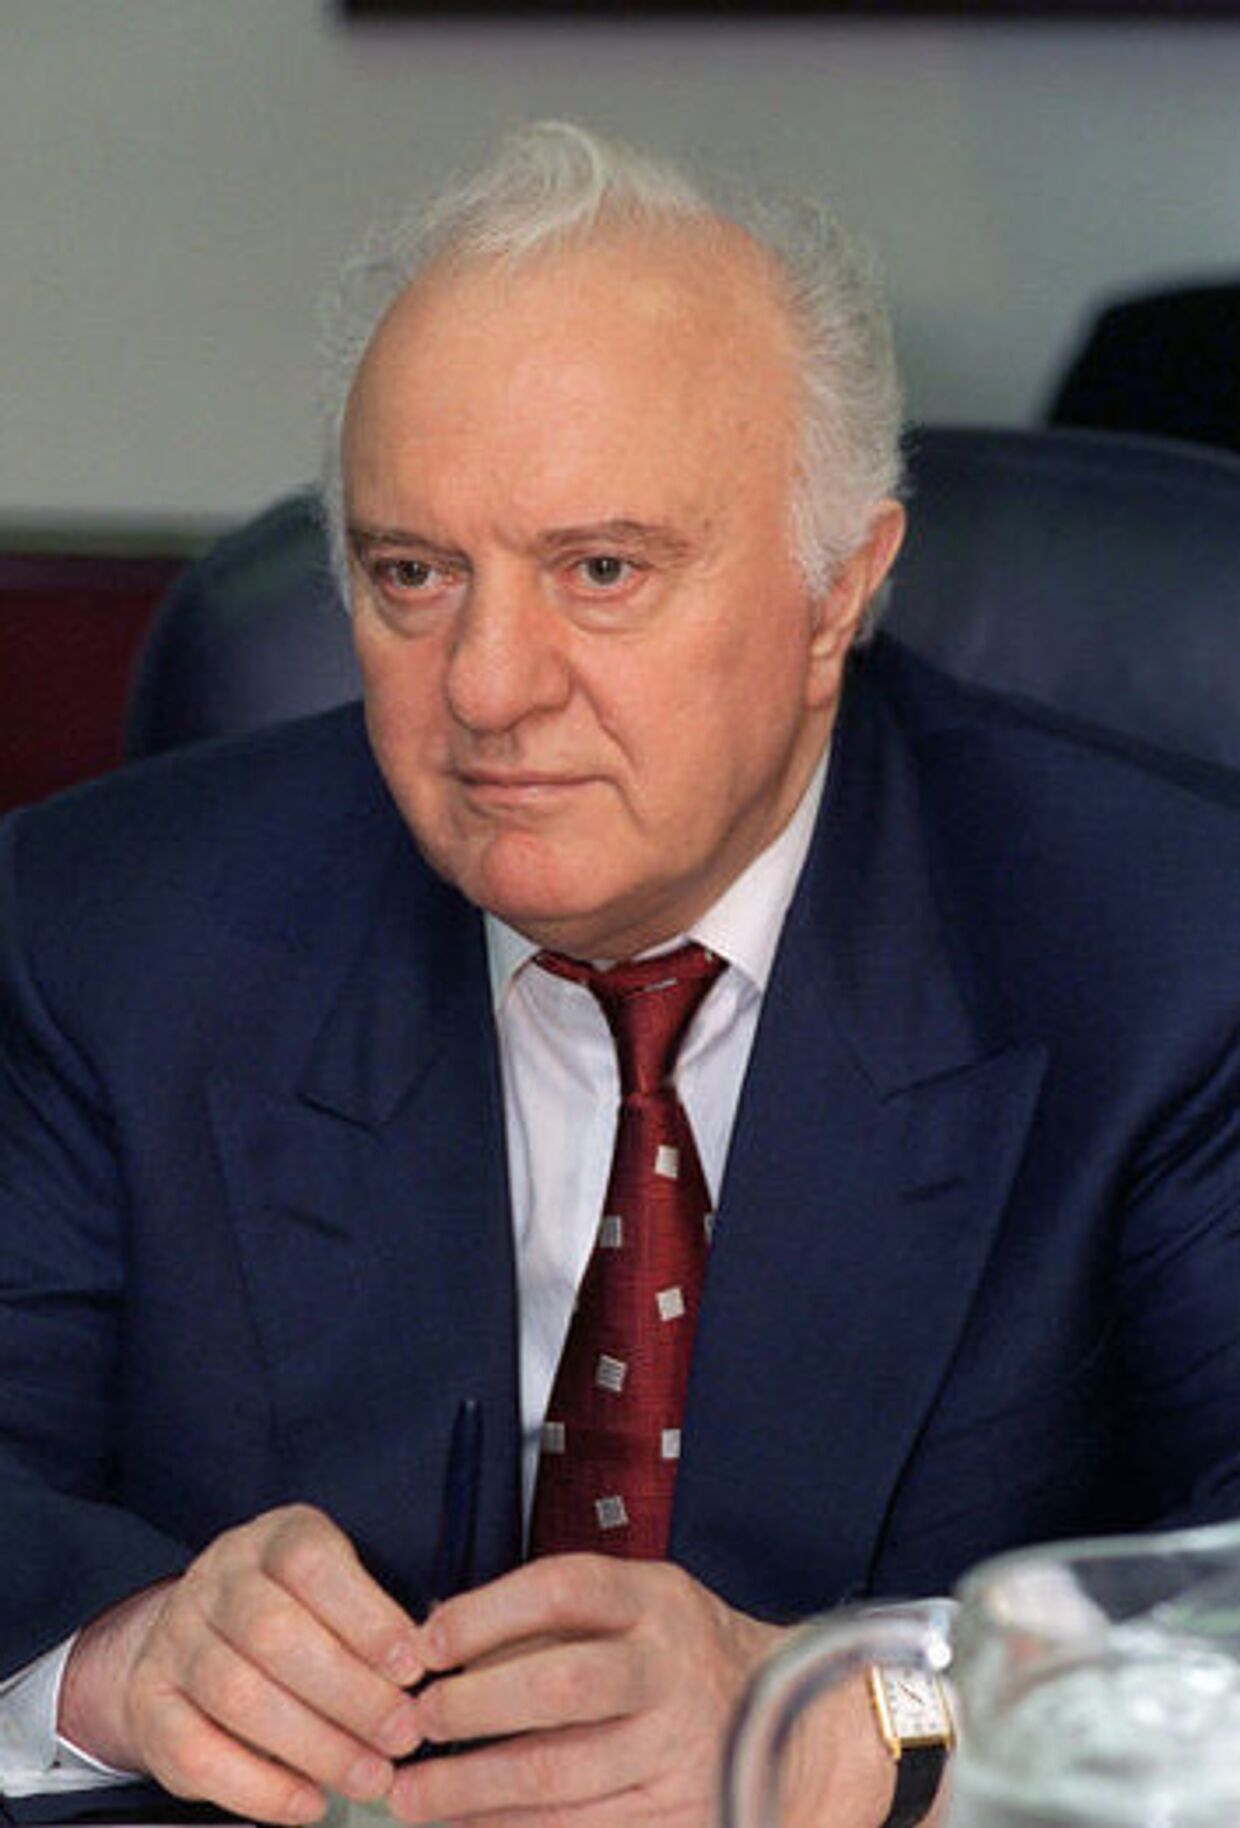 Бывший президент Грузии Эдуард Шеварднадзе